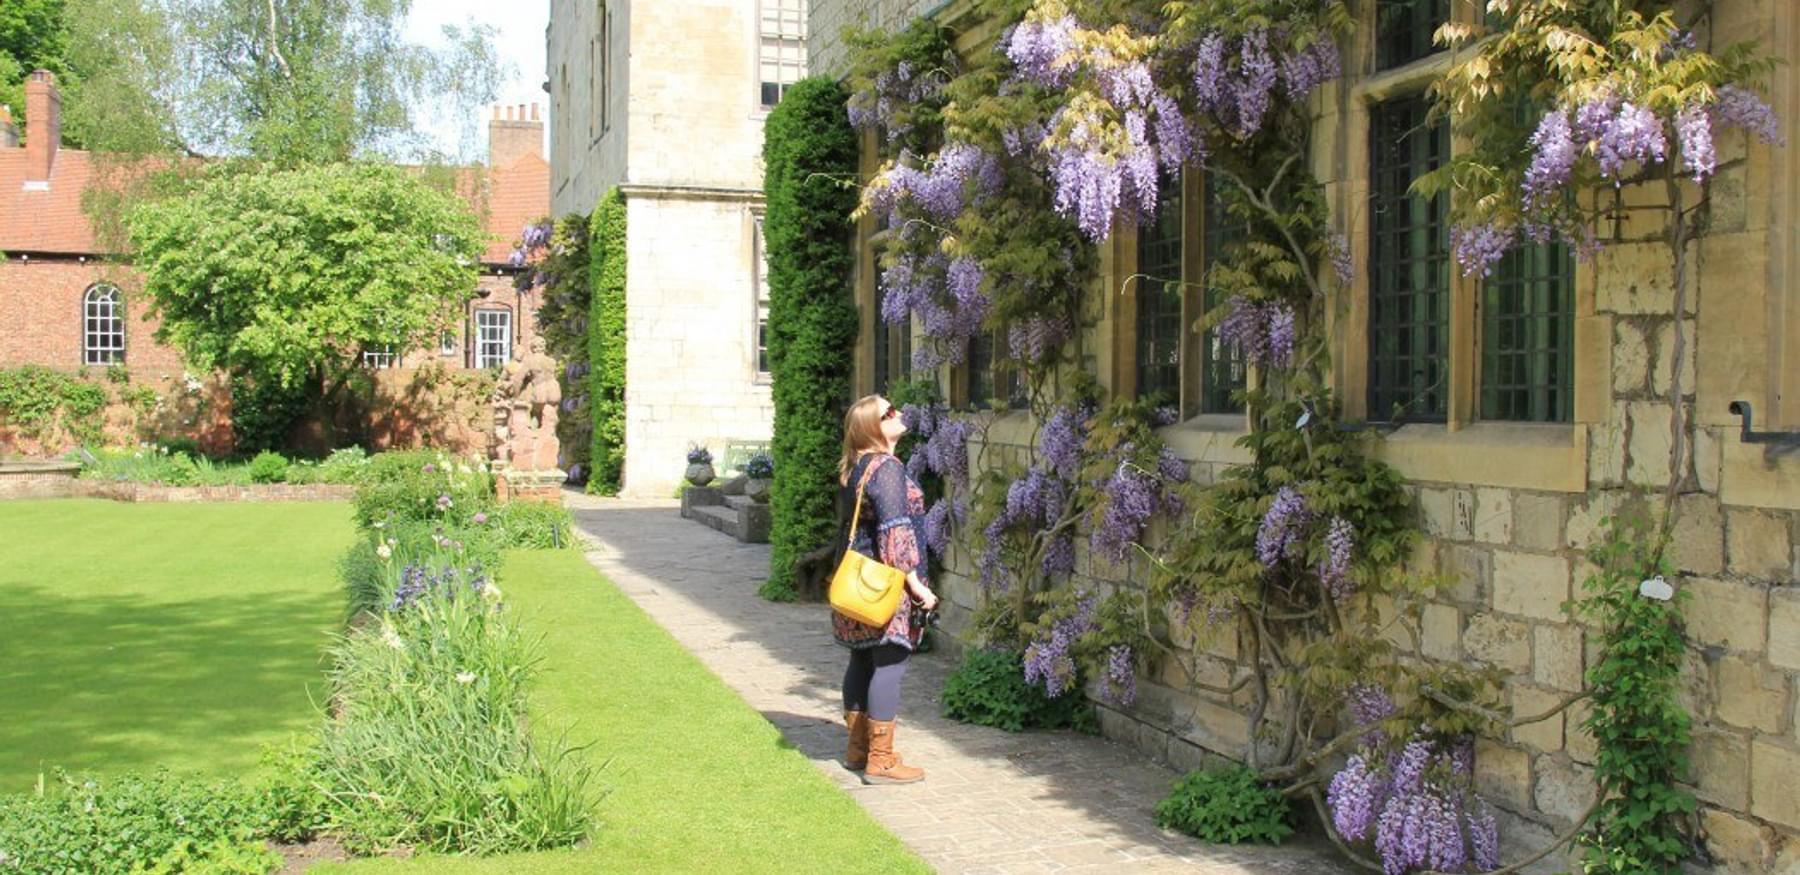 Blog Conversant Traveller Admiring the wisteria at Treasurers House in York